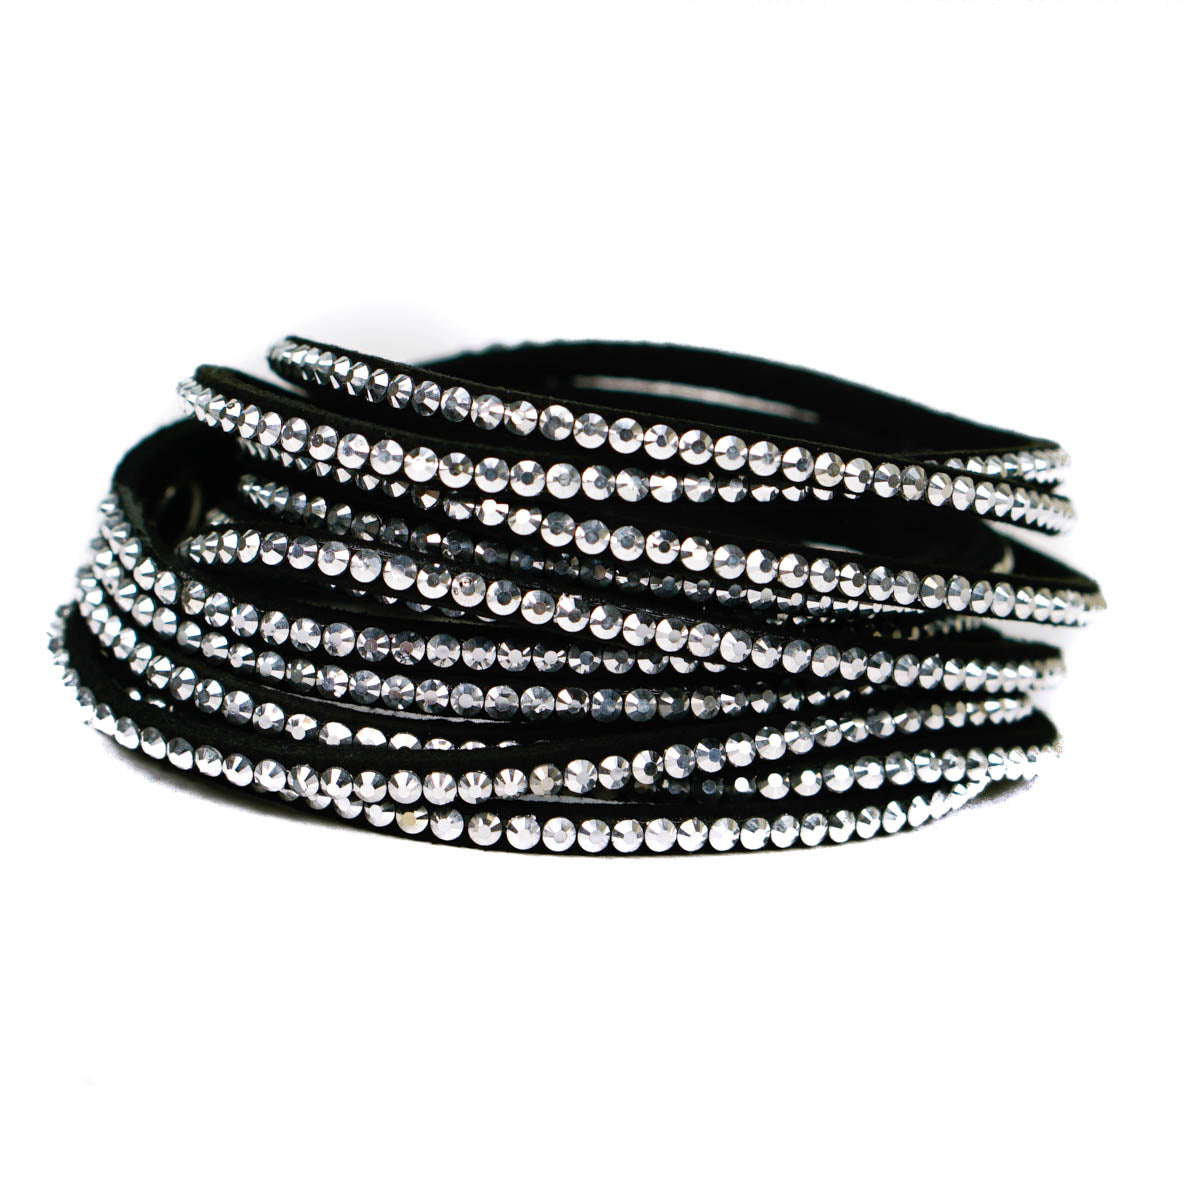 Aeon Black Crystal Studded Wrap Bracelet